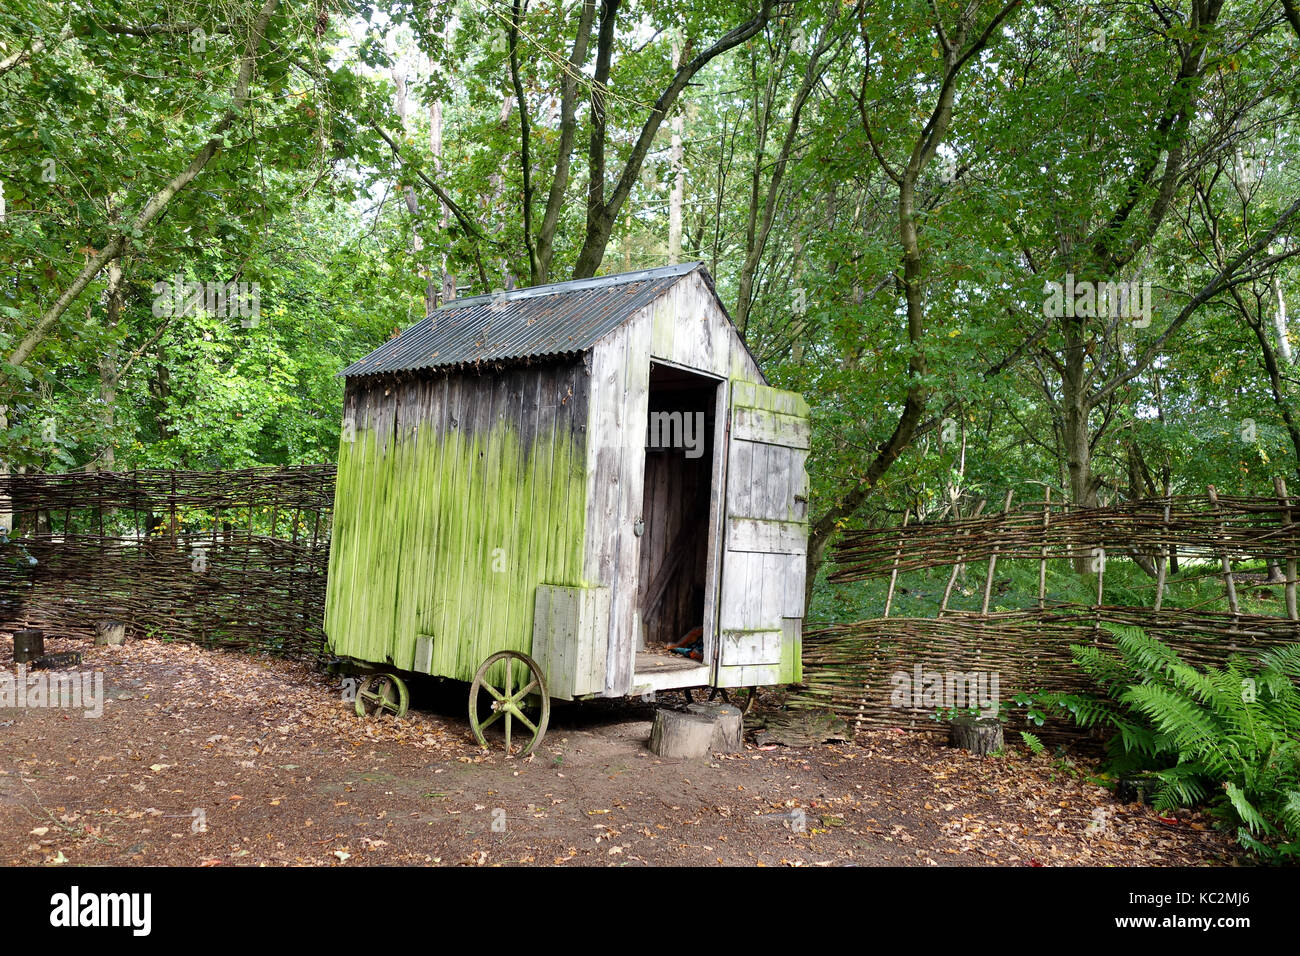 Woodland garden shed on wheels Britain Uk Stock Photo